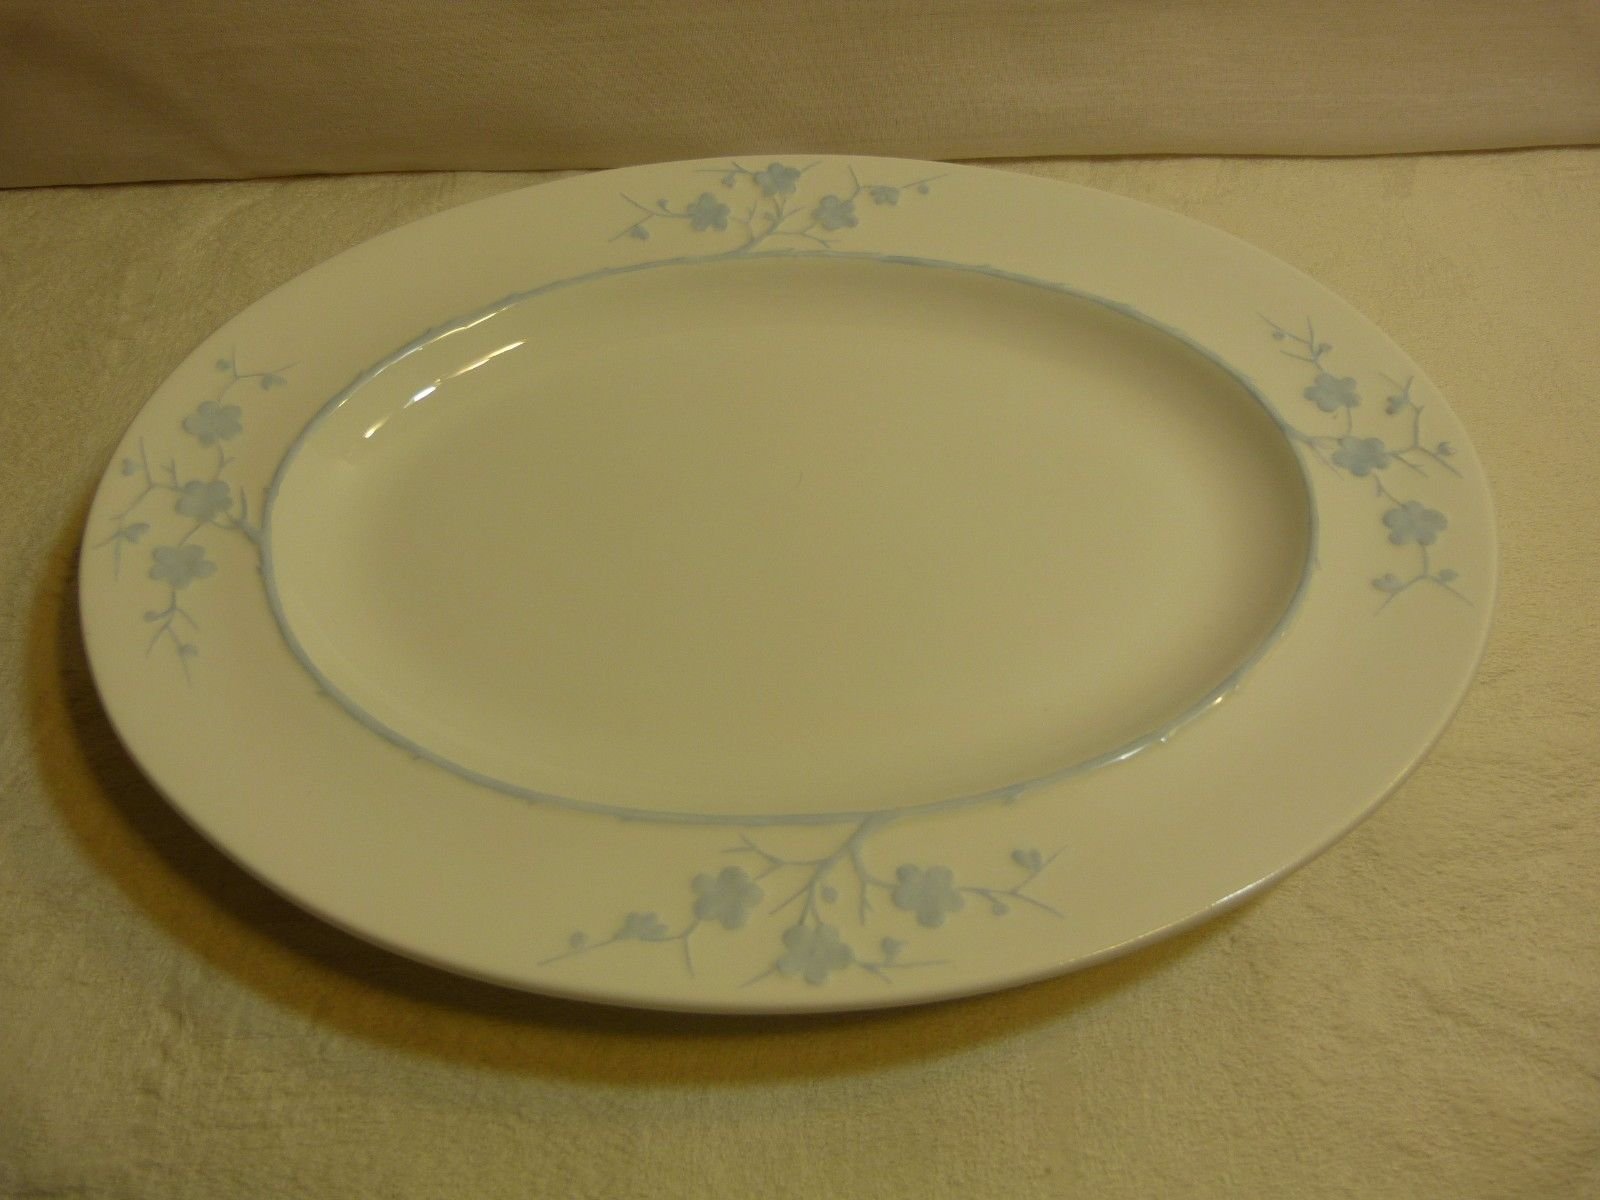 Primary image for Spode Copeland England Blanche de Chine Geisha Blue 15" Oval Serving Platter